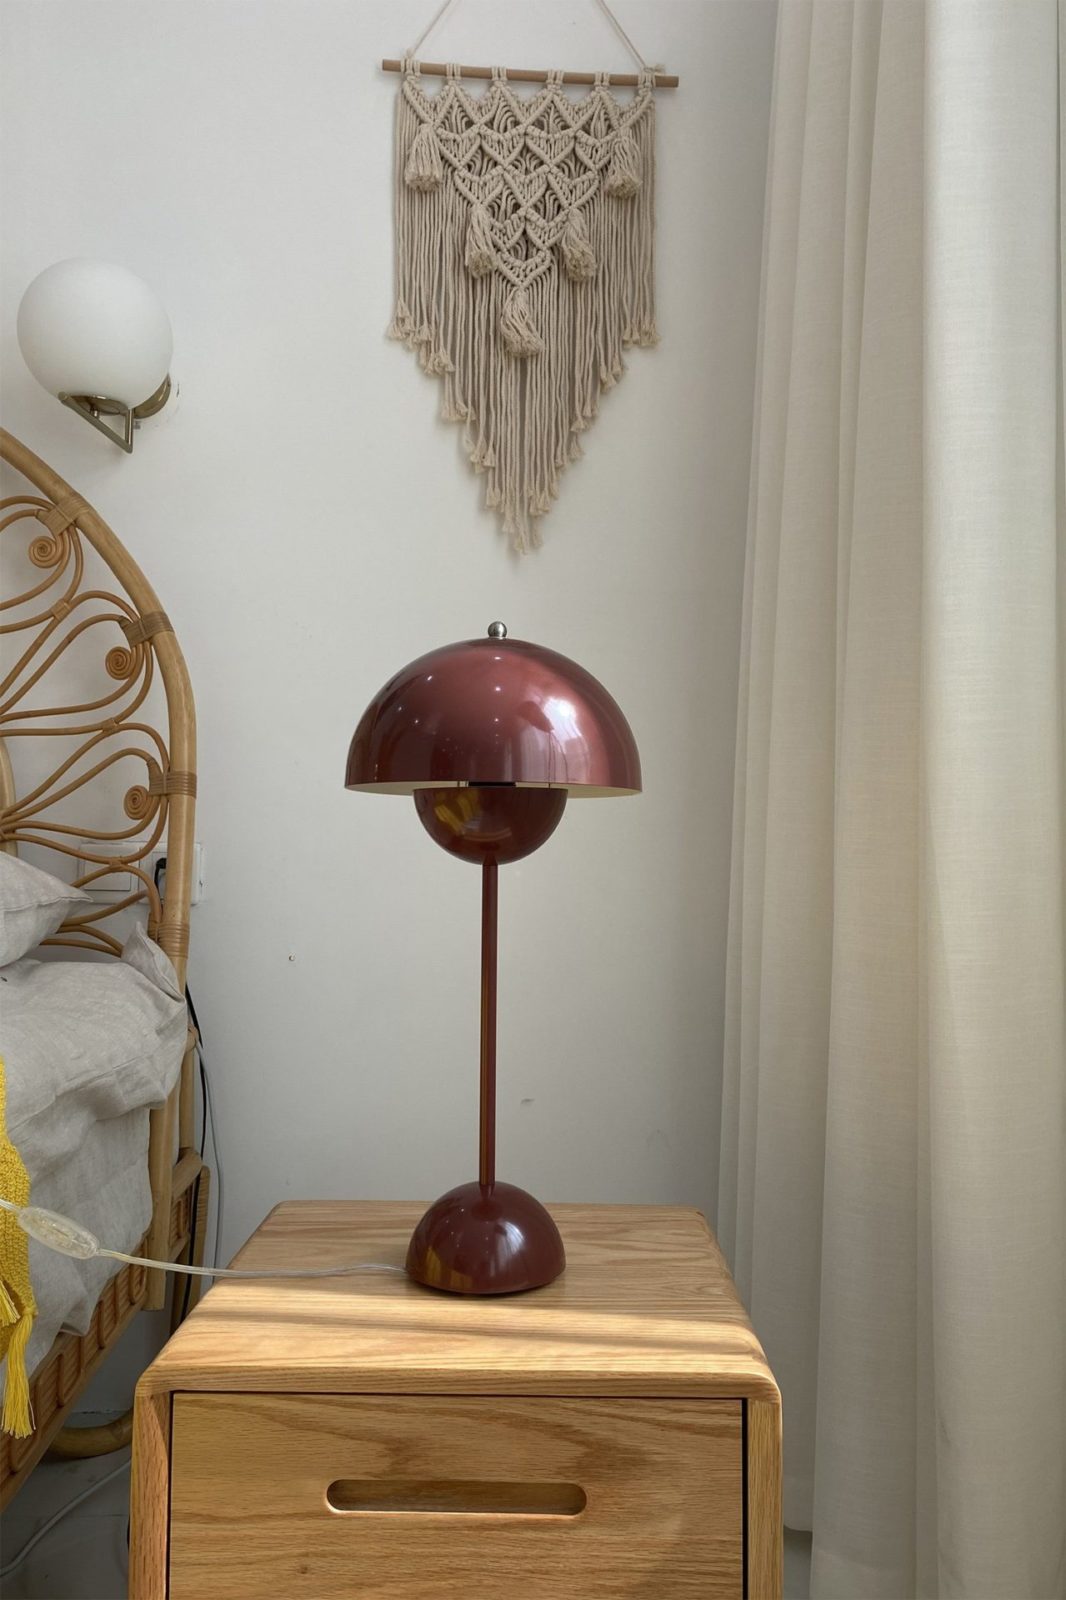 Whare Table Lamp  Burnished Brass - Modern Komfort Canada